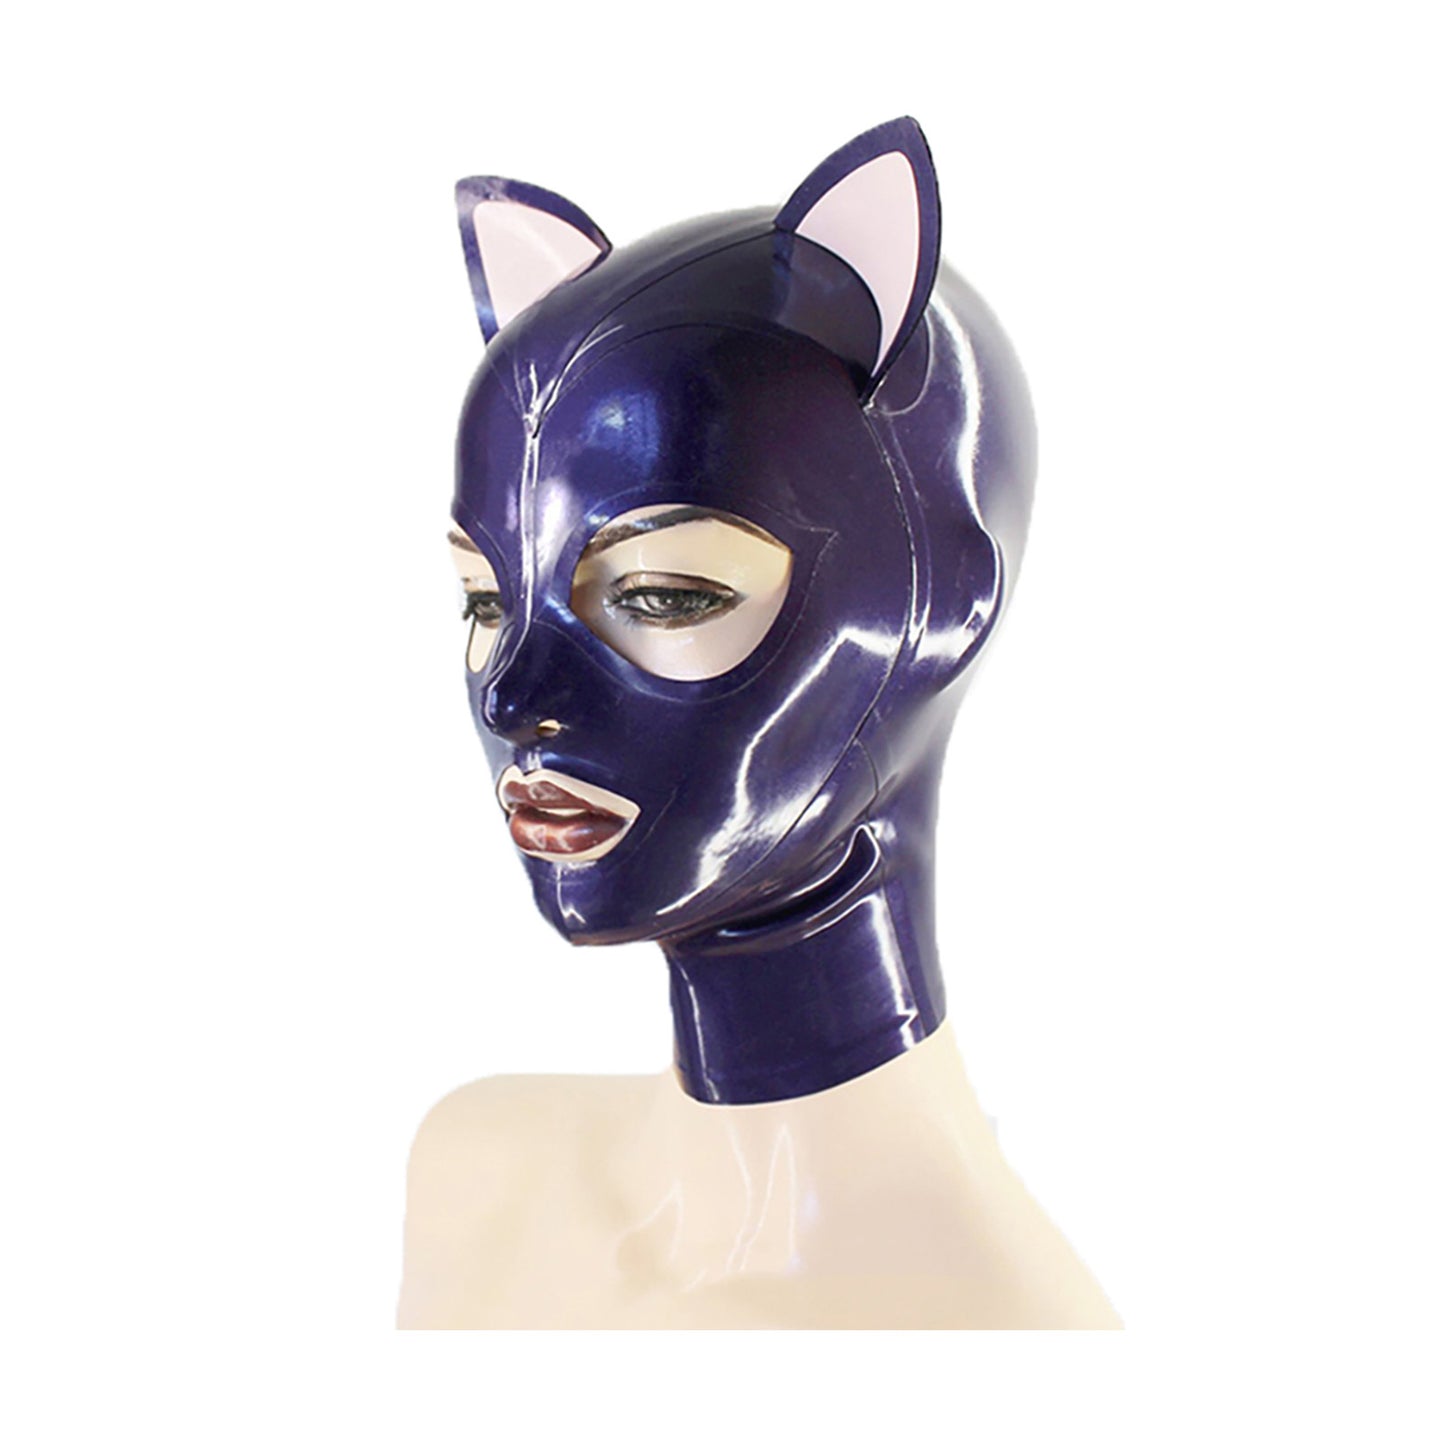 MONNIK Latex Unisex Cat Hood Mask Purple Attached Ears for Party Wear Bodysuit with Rear Zipper Handmade